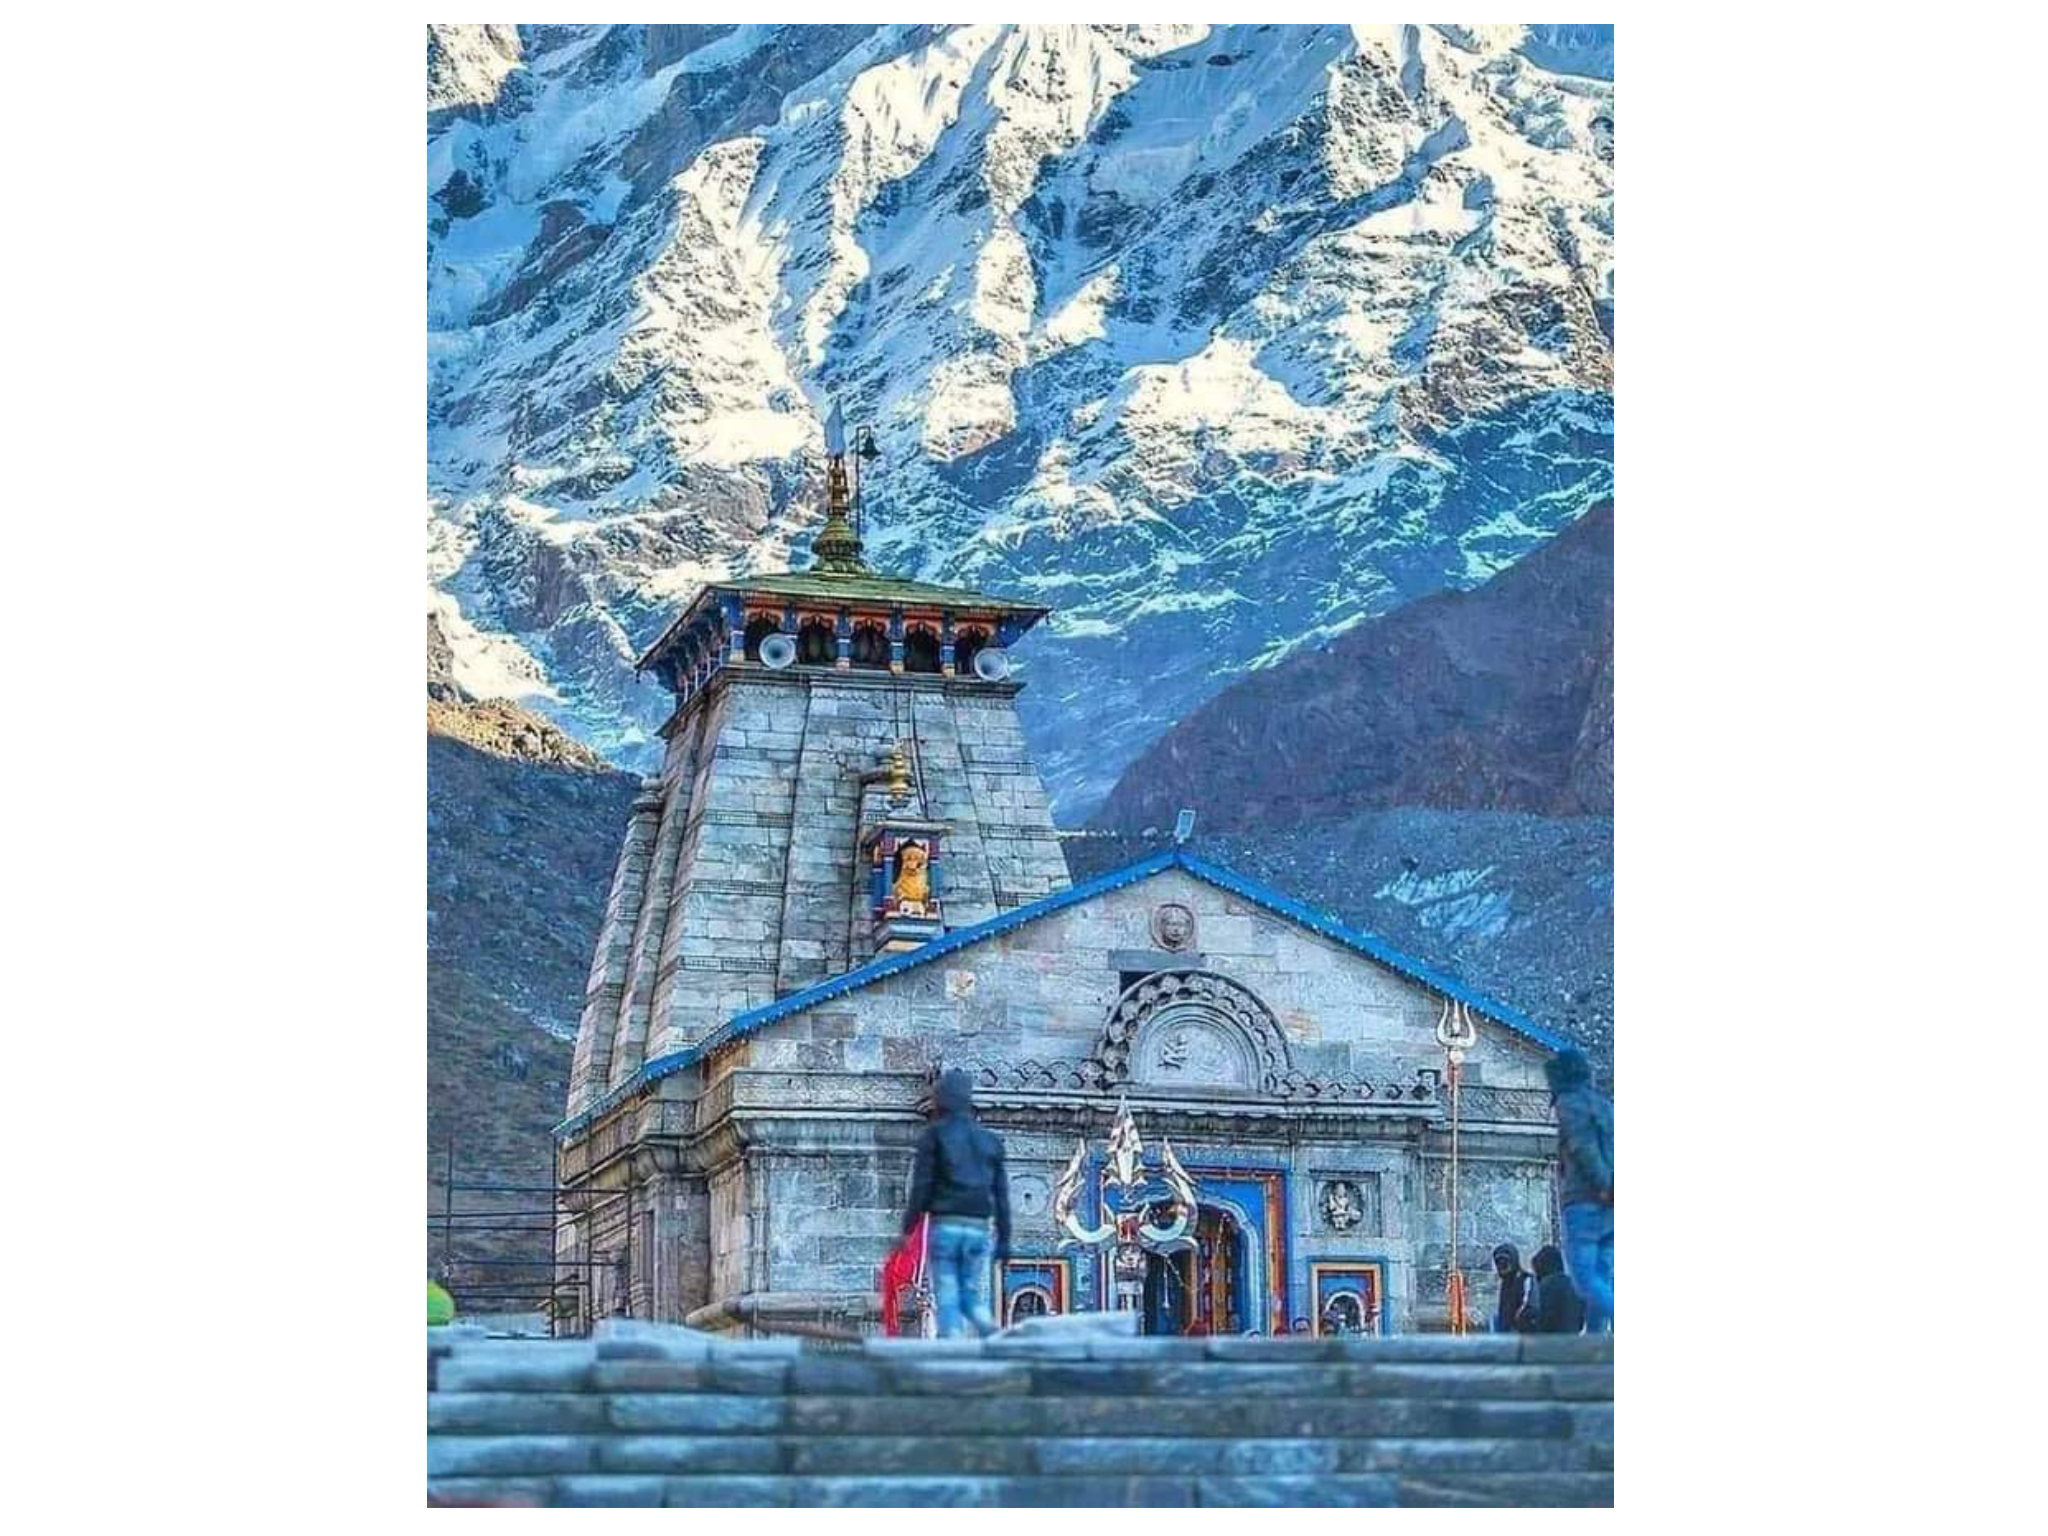 Kedarnath Temple - One of Panch Kedars in Uttarakhand